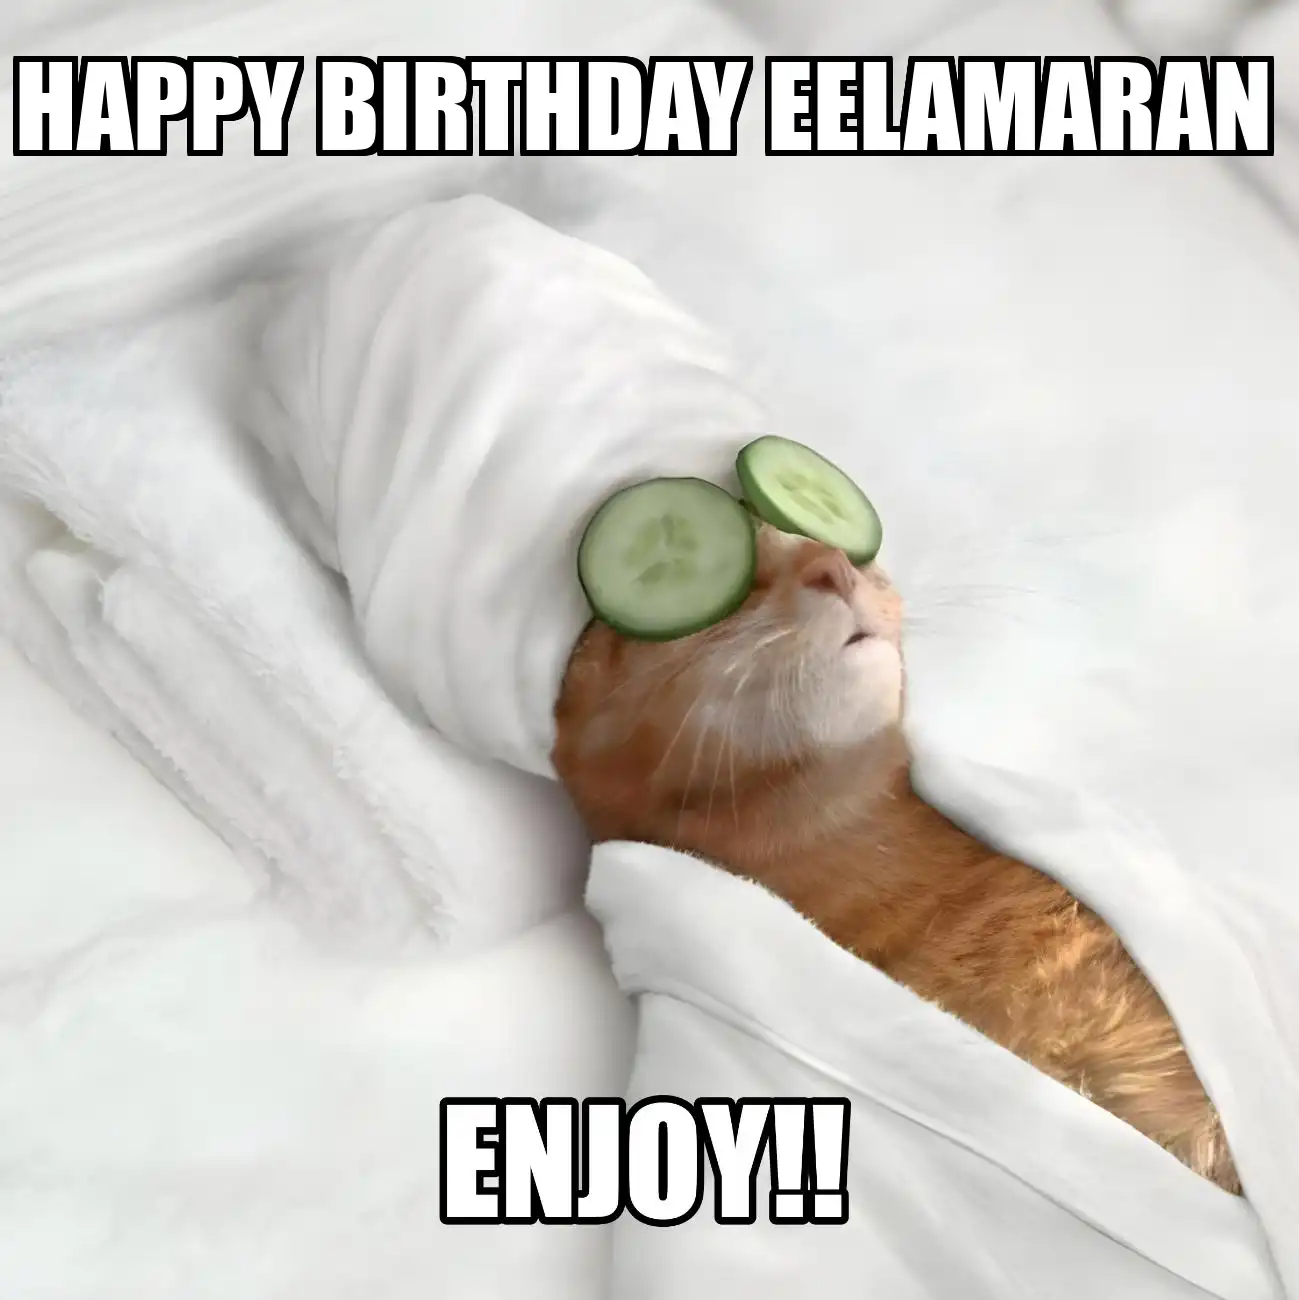 Happy Birthday Eelamaran Enjoy Cat Meme